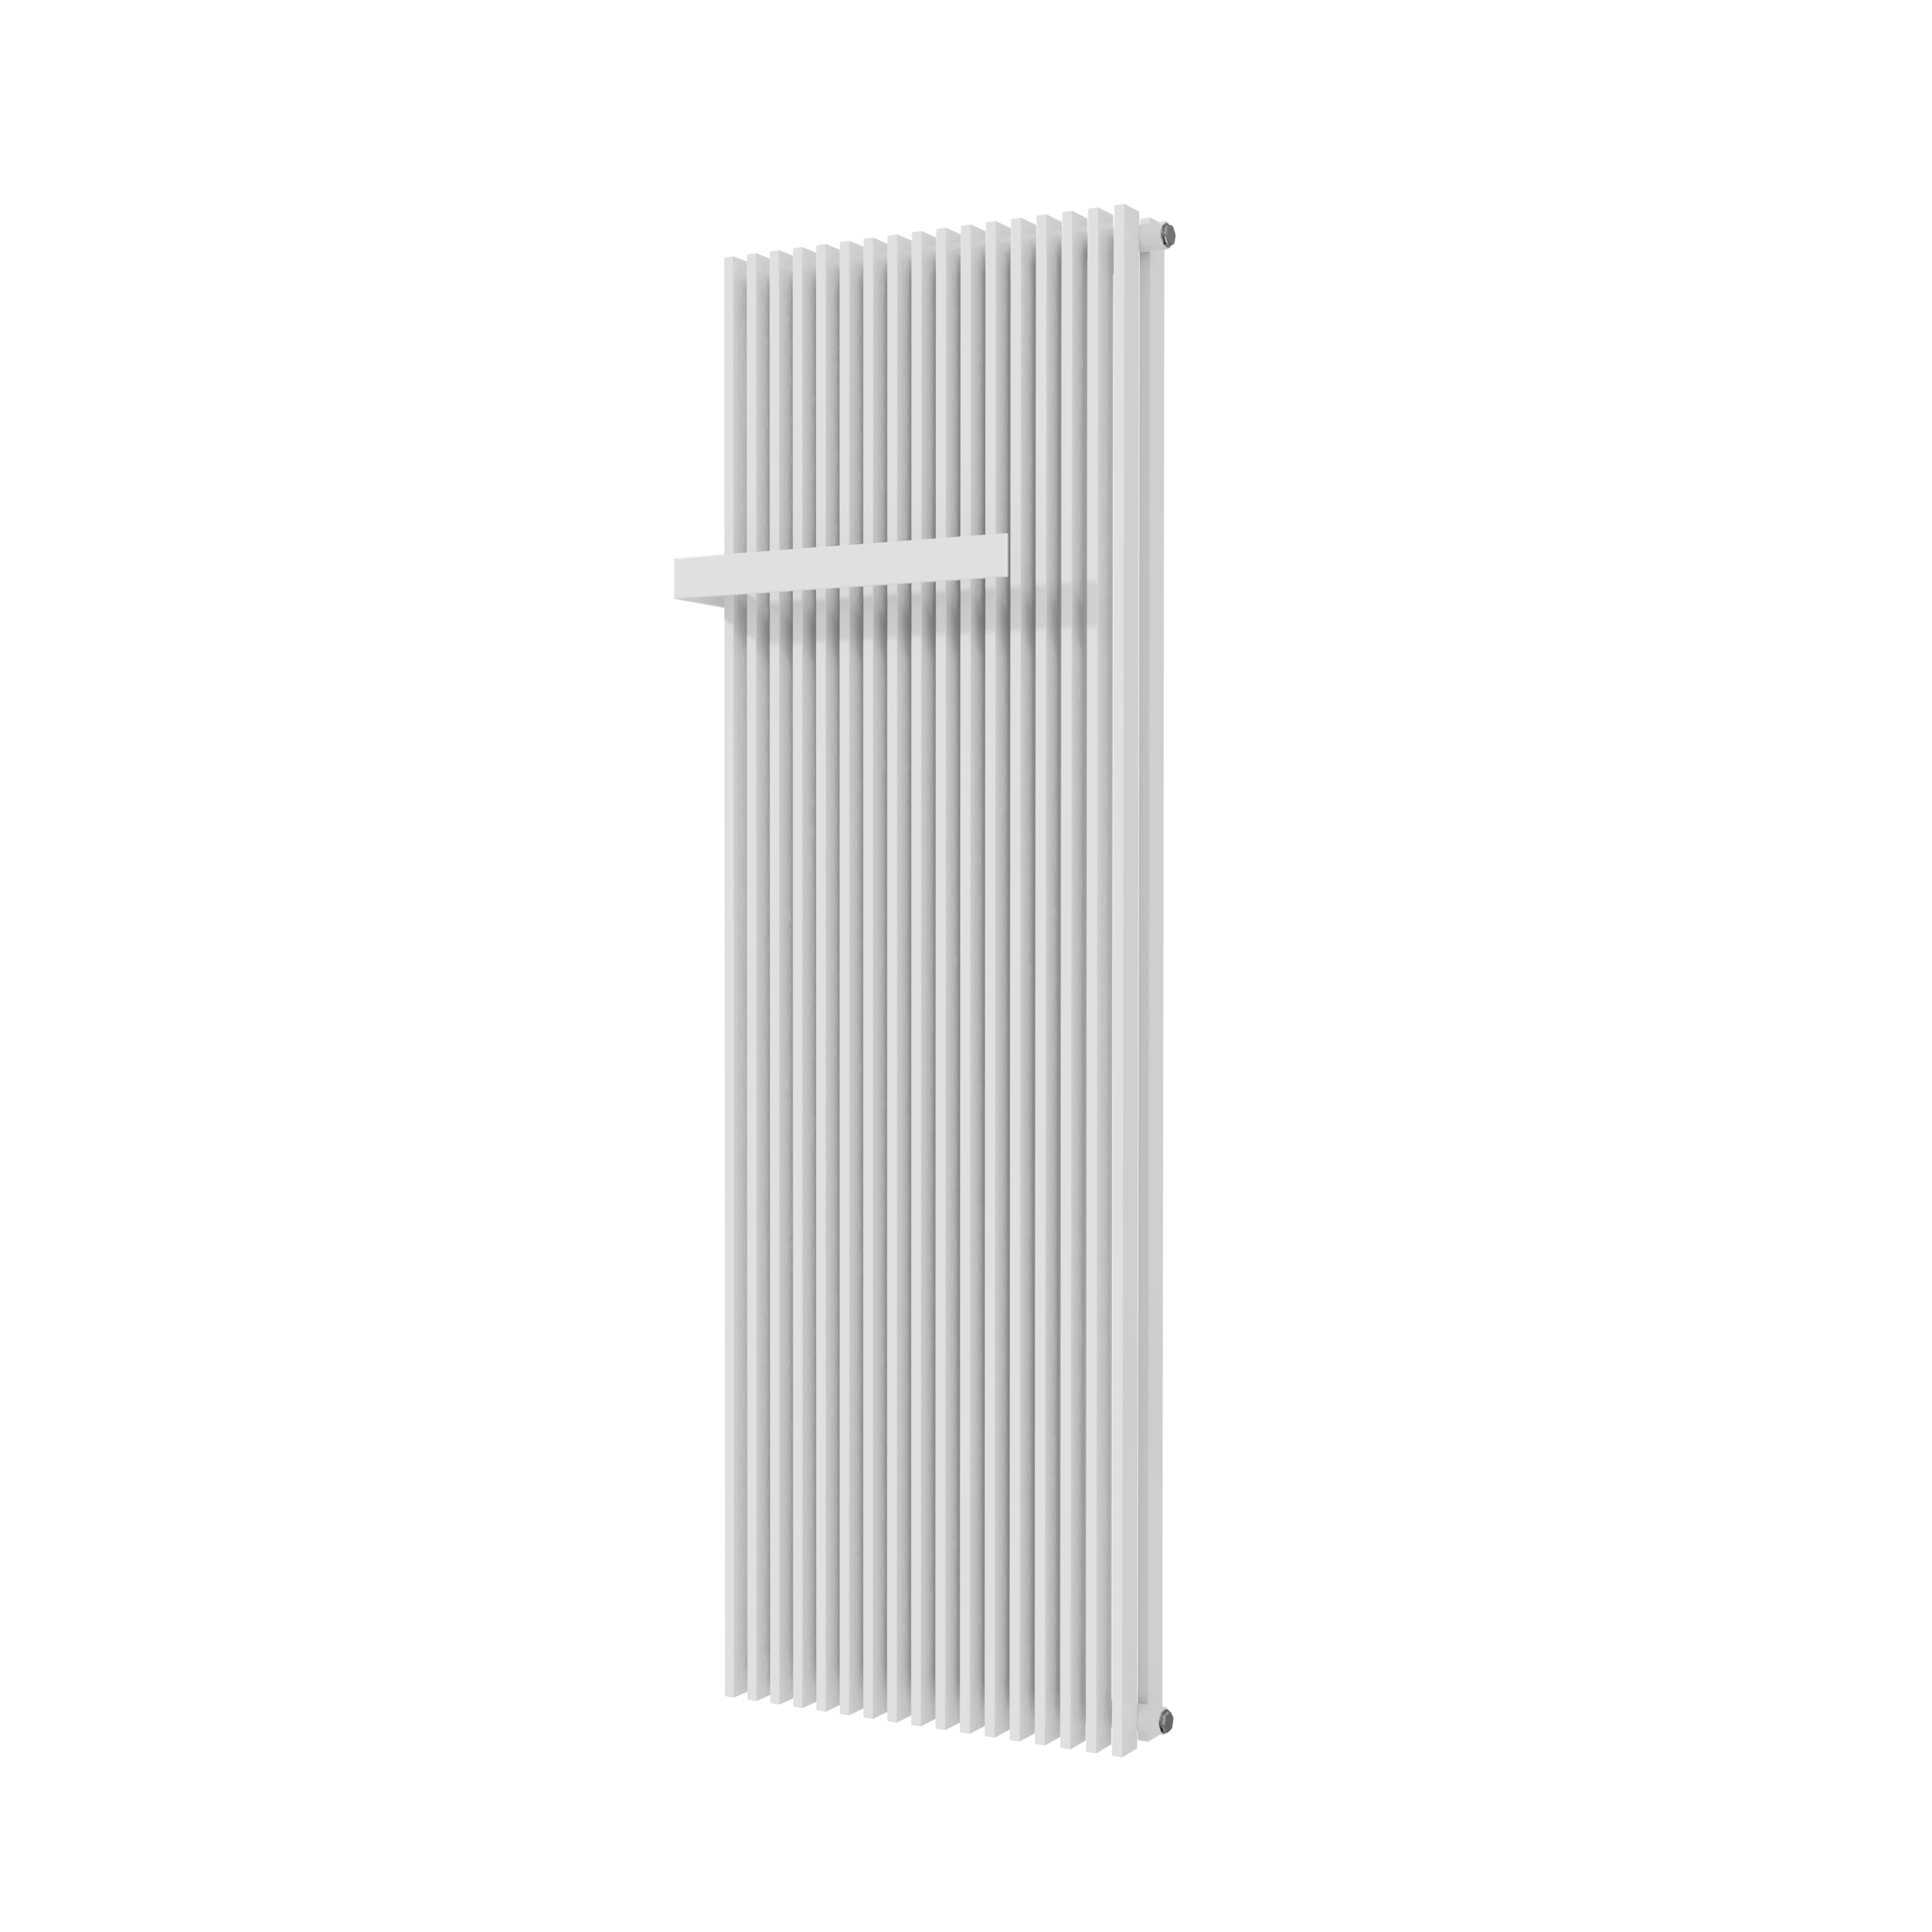 Vipera Corrason dubbele badkamerradiator 60 x 180 cm centrale verwarming hoogglans wit zij- en middenaansluiting 3,468W